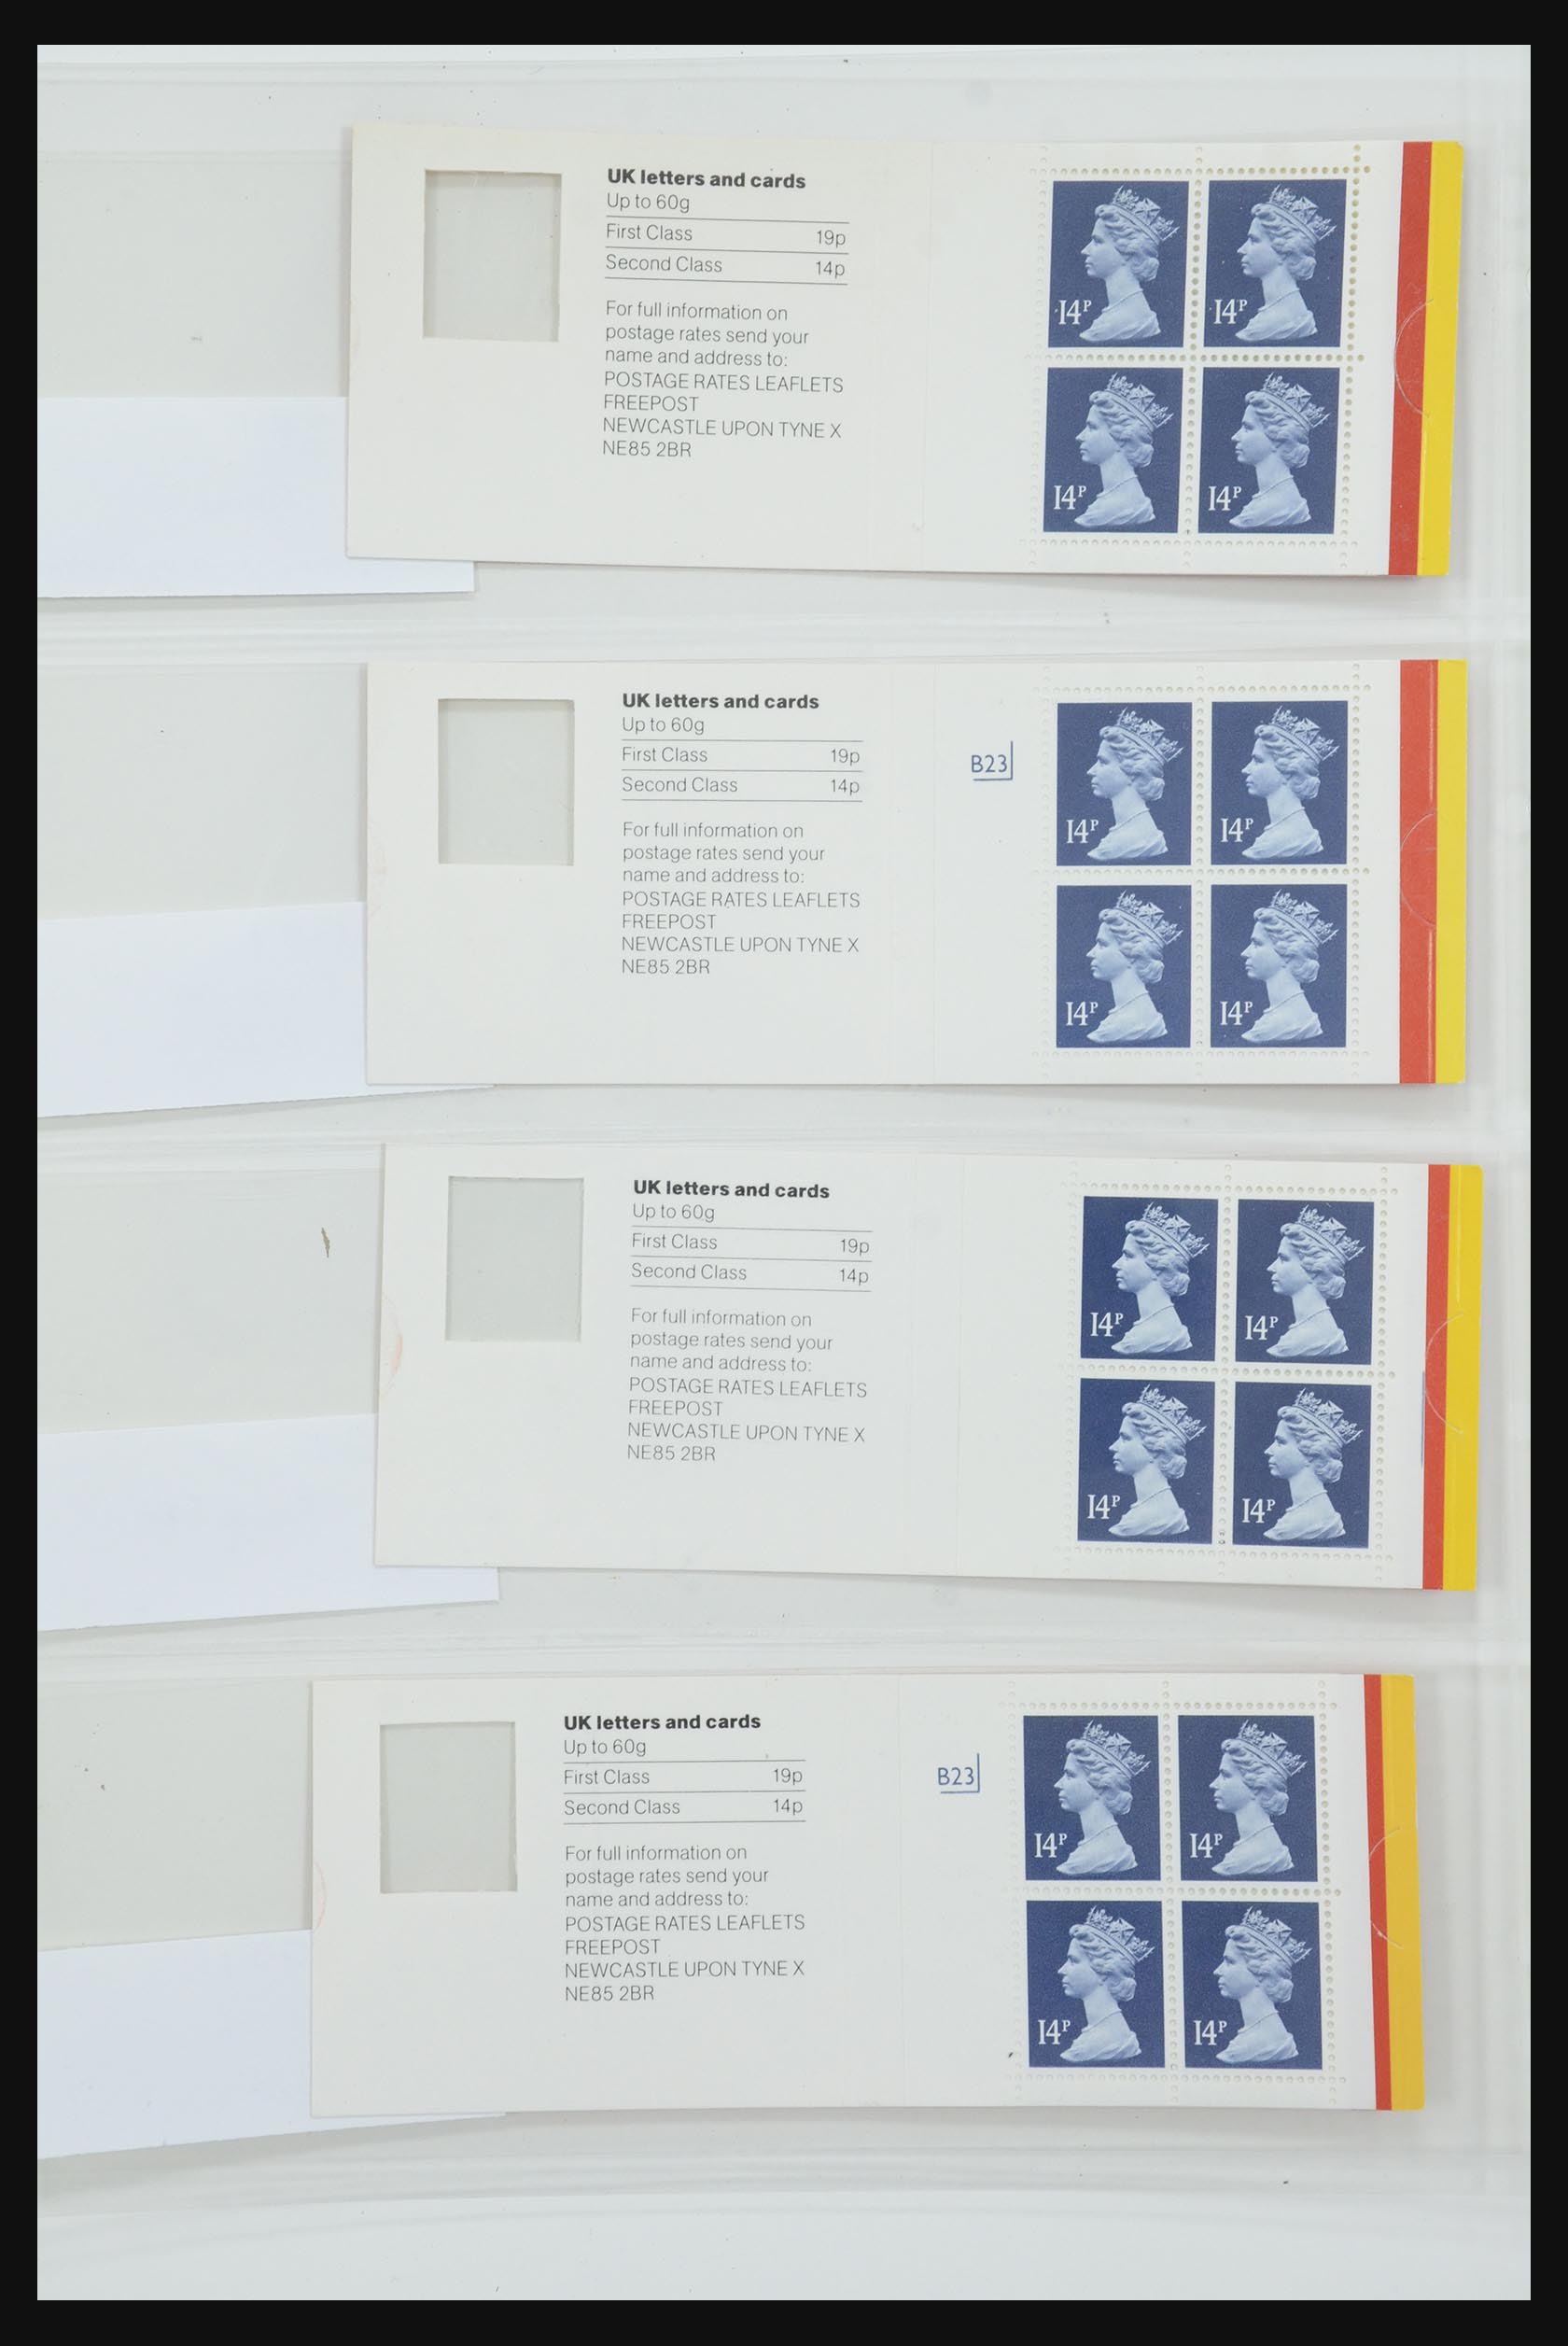 31959 006 - 31959 Great Britain stampbooklets 1987-2016!!